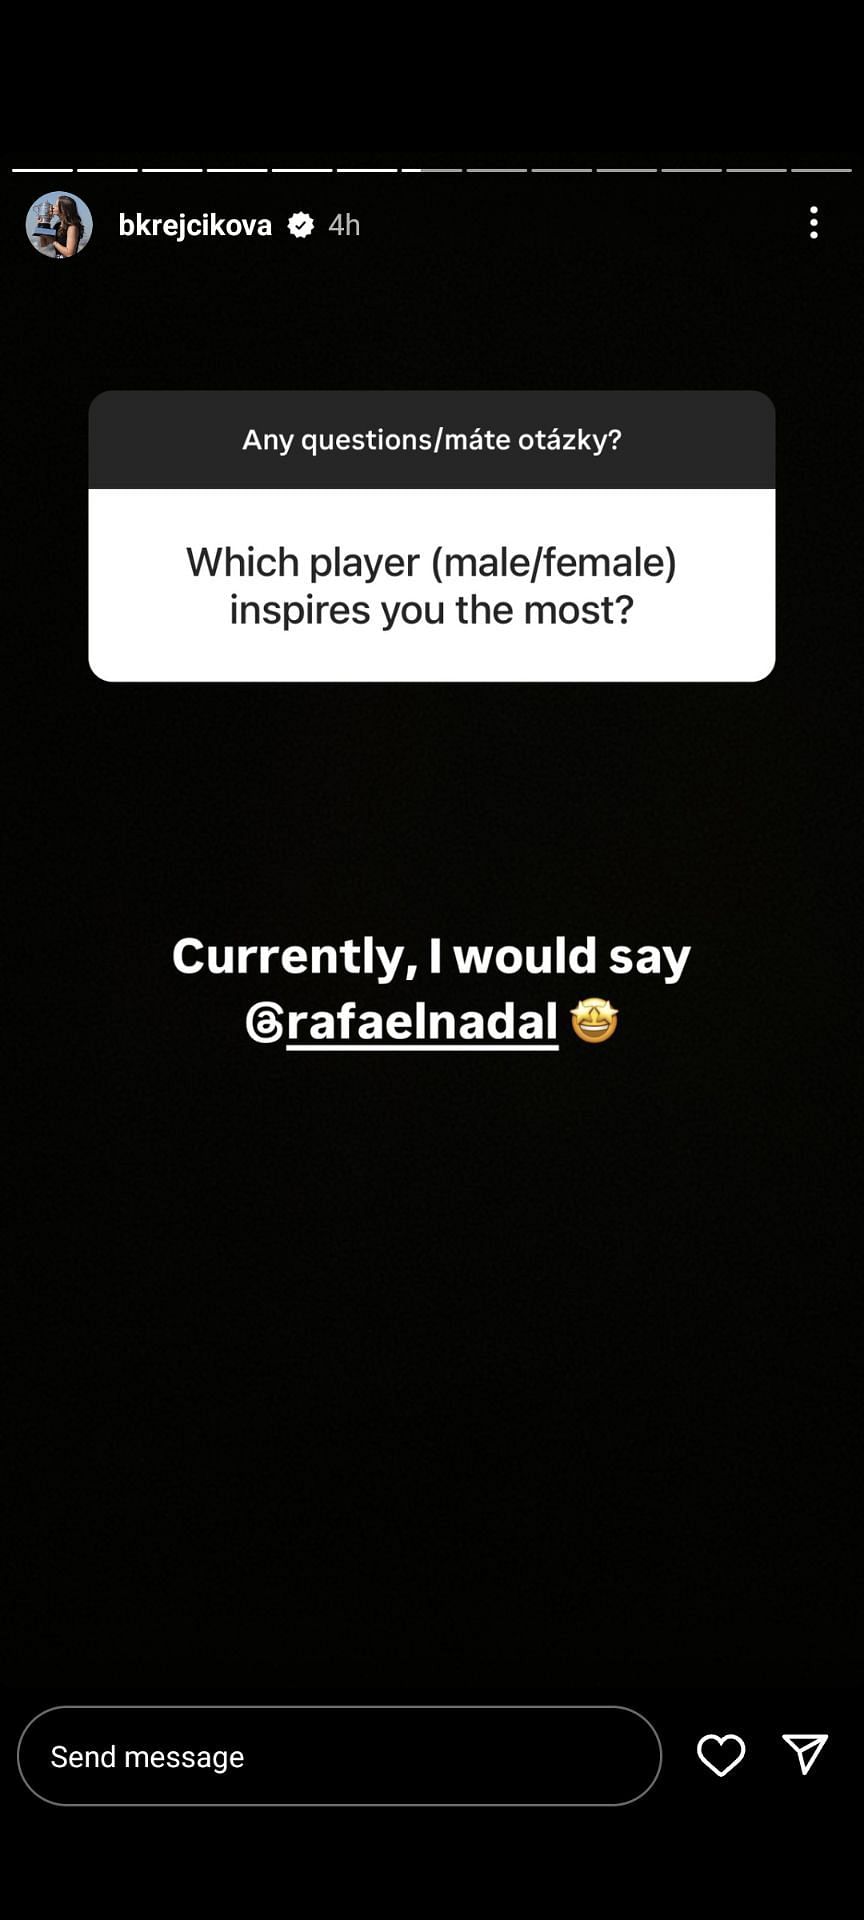 Barbora Krejcikova names Rafael Nadal as the player who inspires her the most